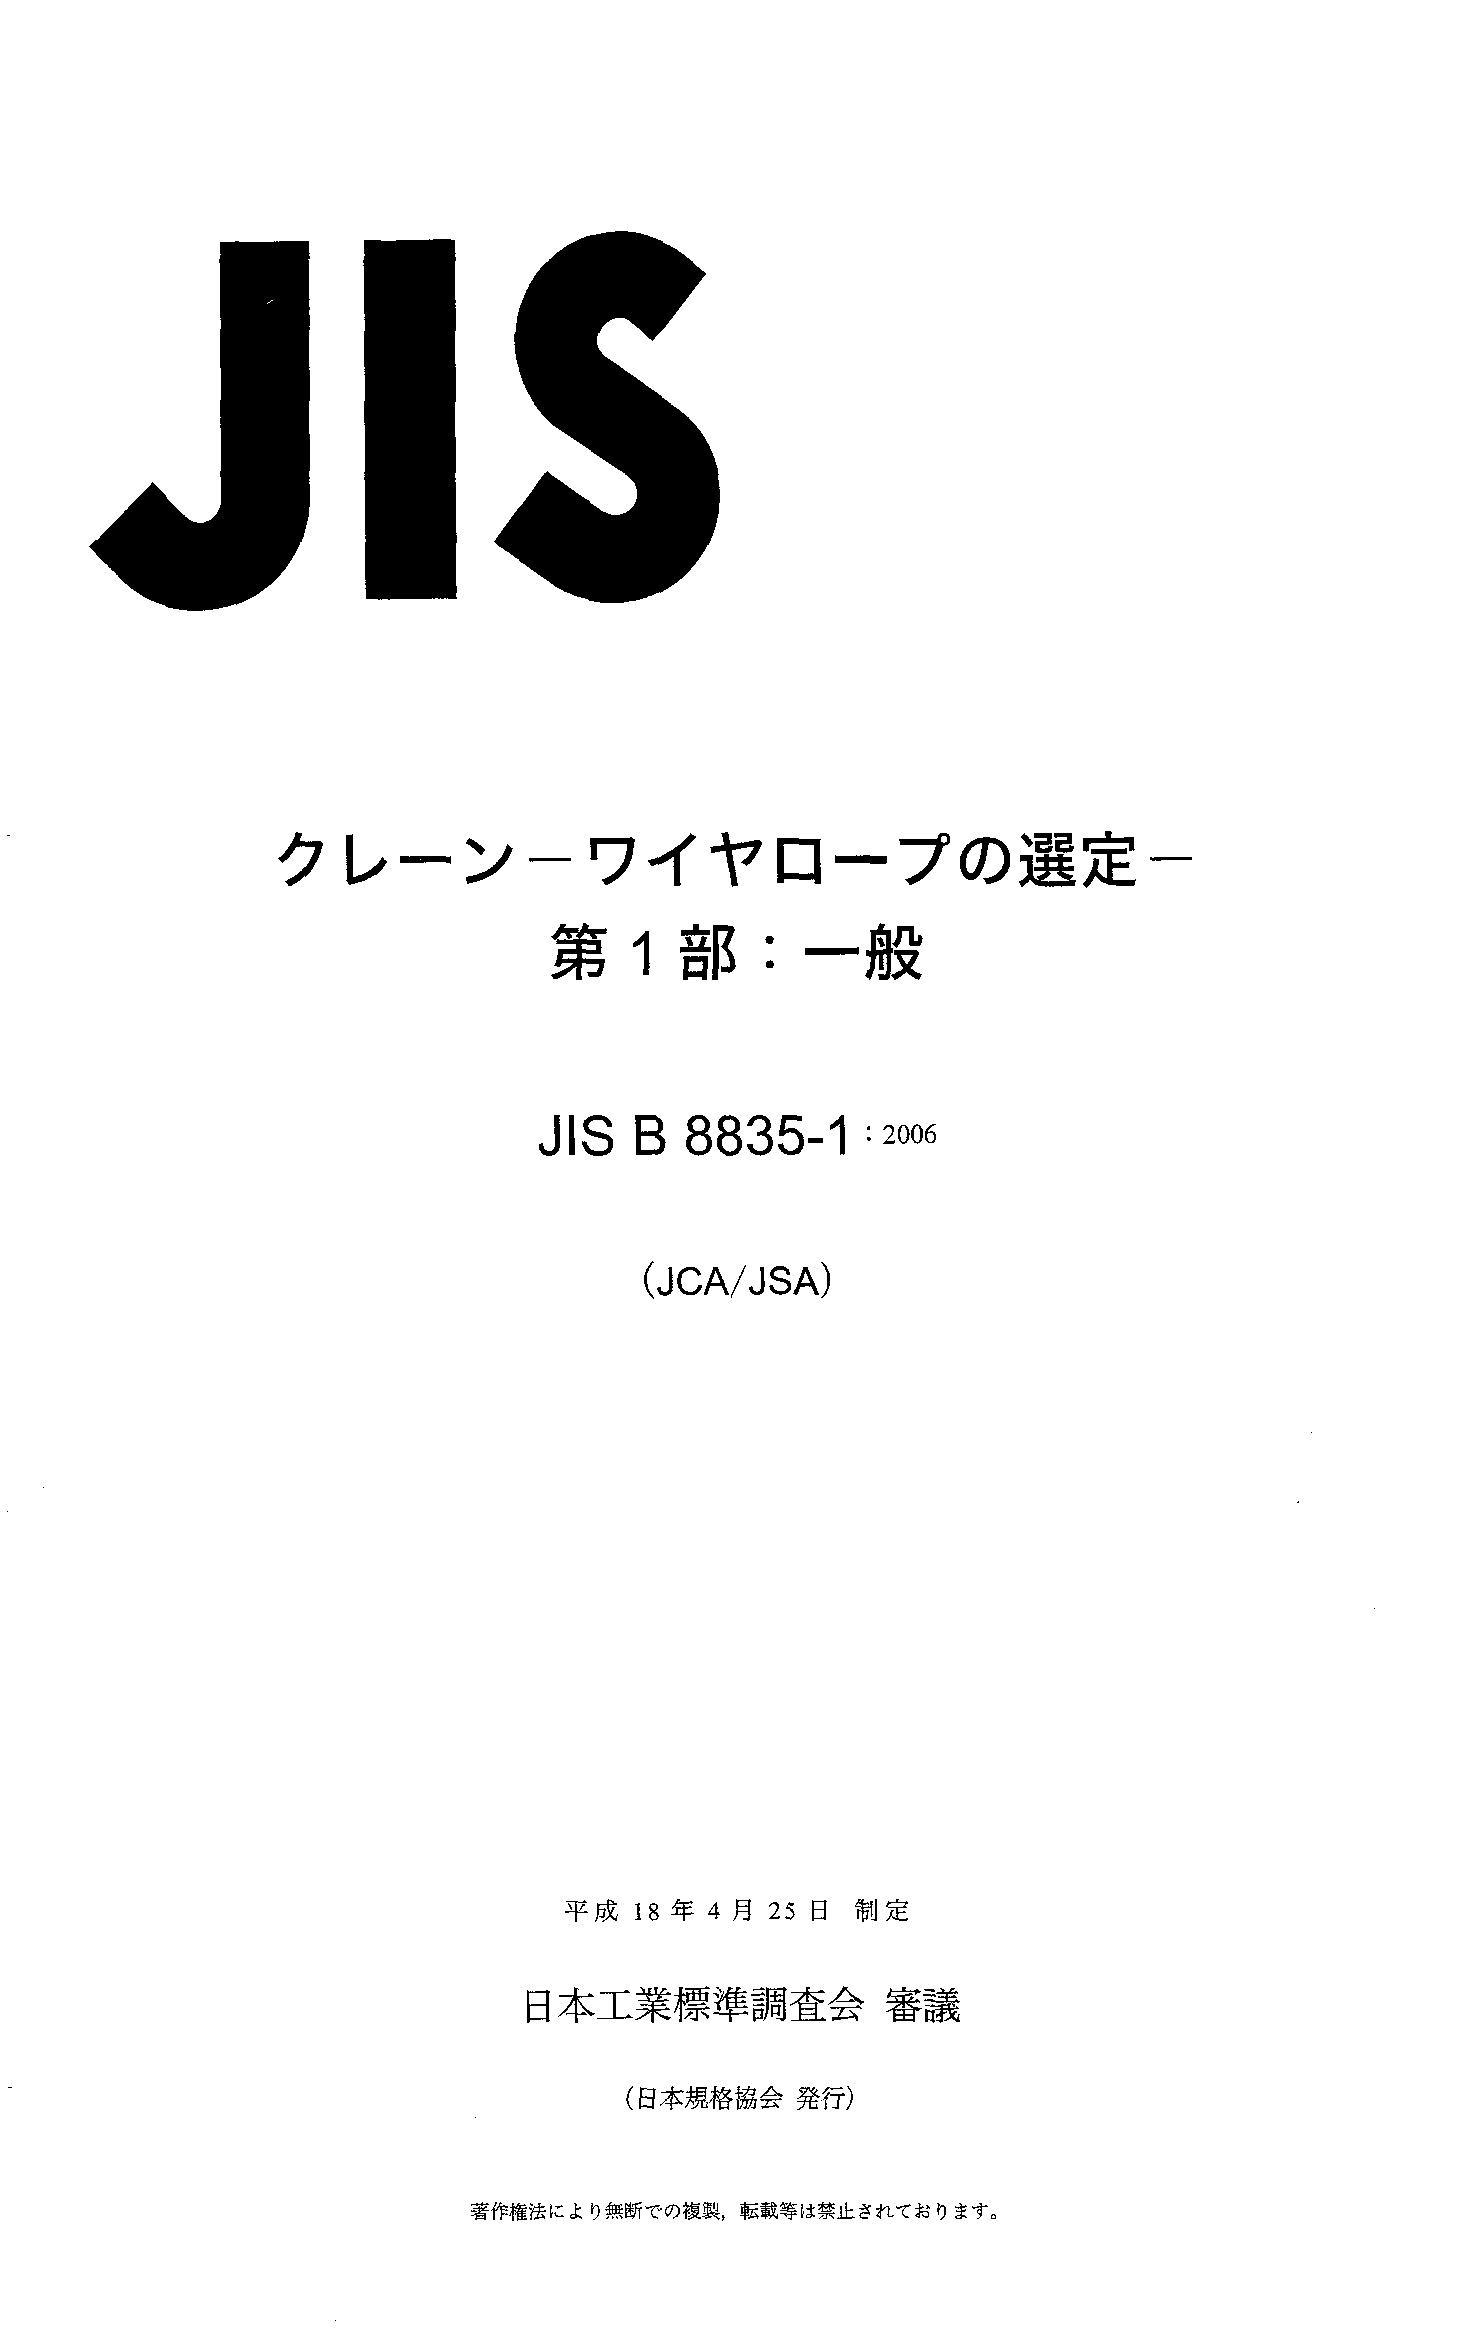 JIS B 8835-1:2006